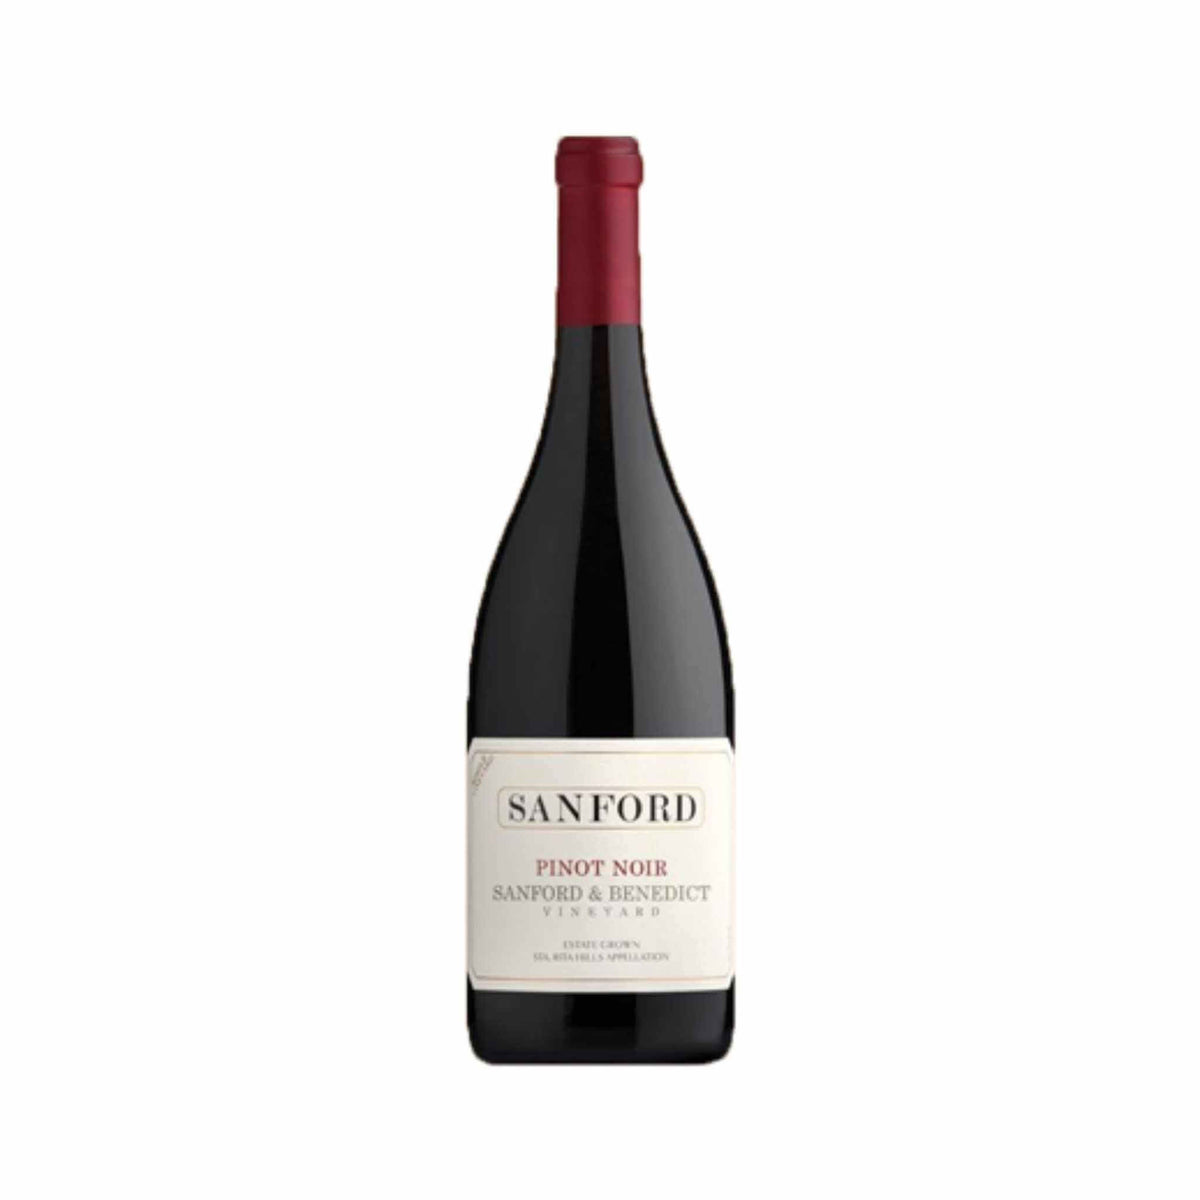 Sanford Winery-Rotwein-Pinot Noir-2017 Pinot Noir Sanford & Benedict Vineyard-WINECOM